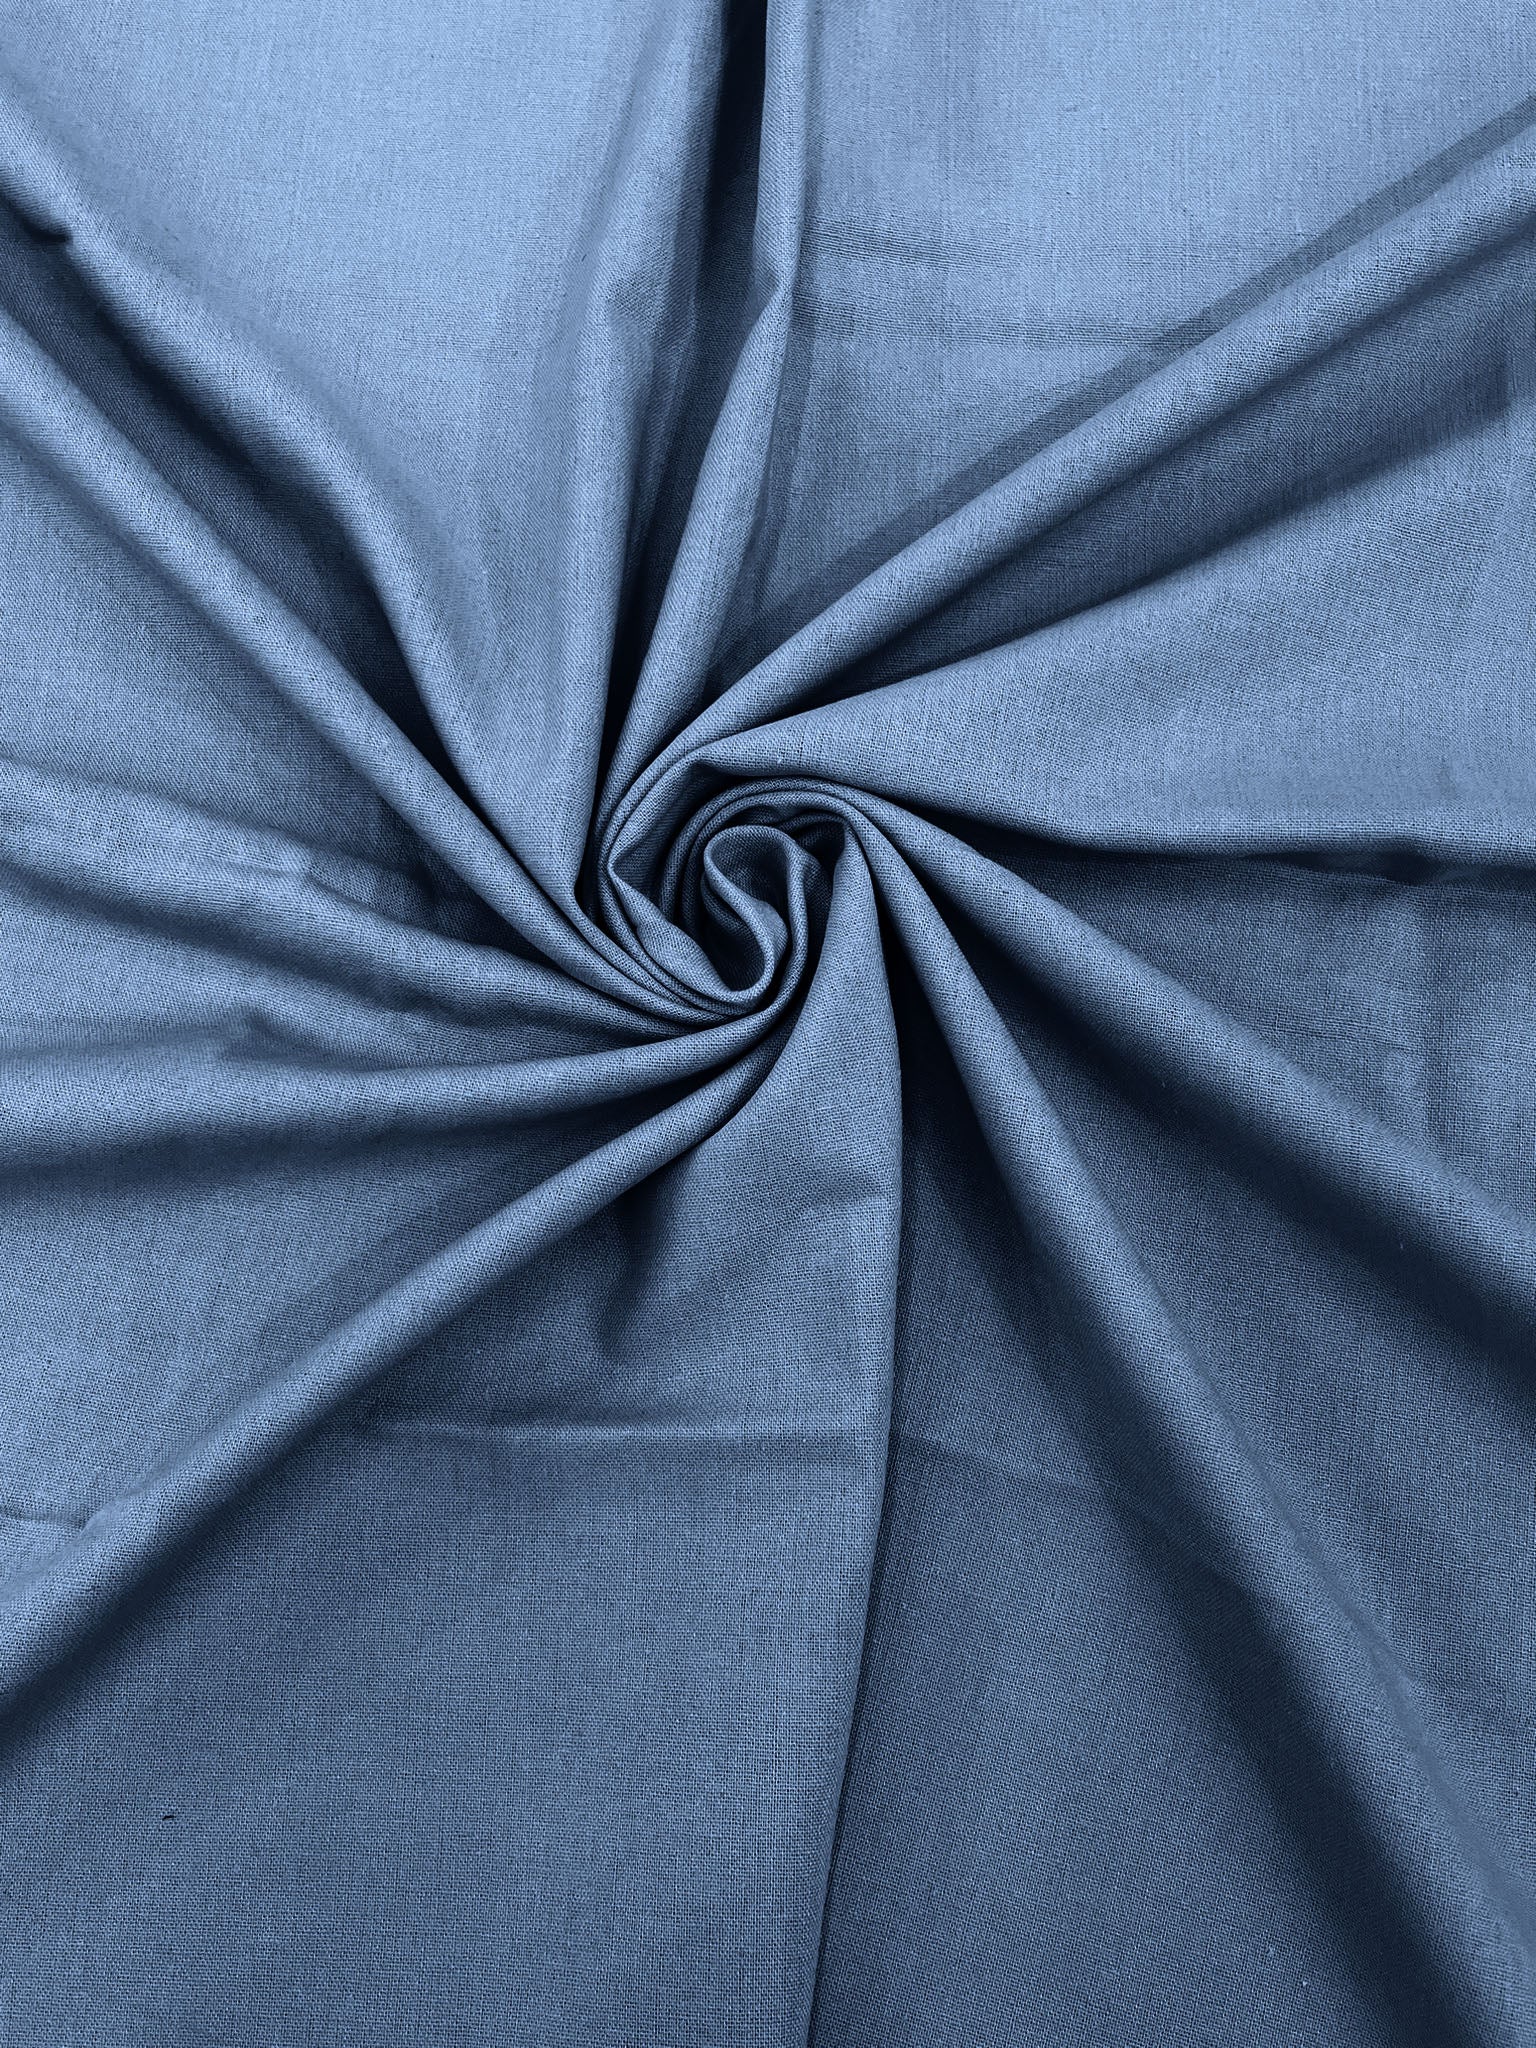 Sky Blue Medium Weight Natural Linen Fabric/50 " Wide/Clothing